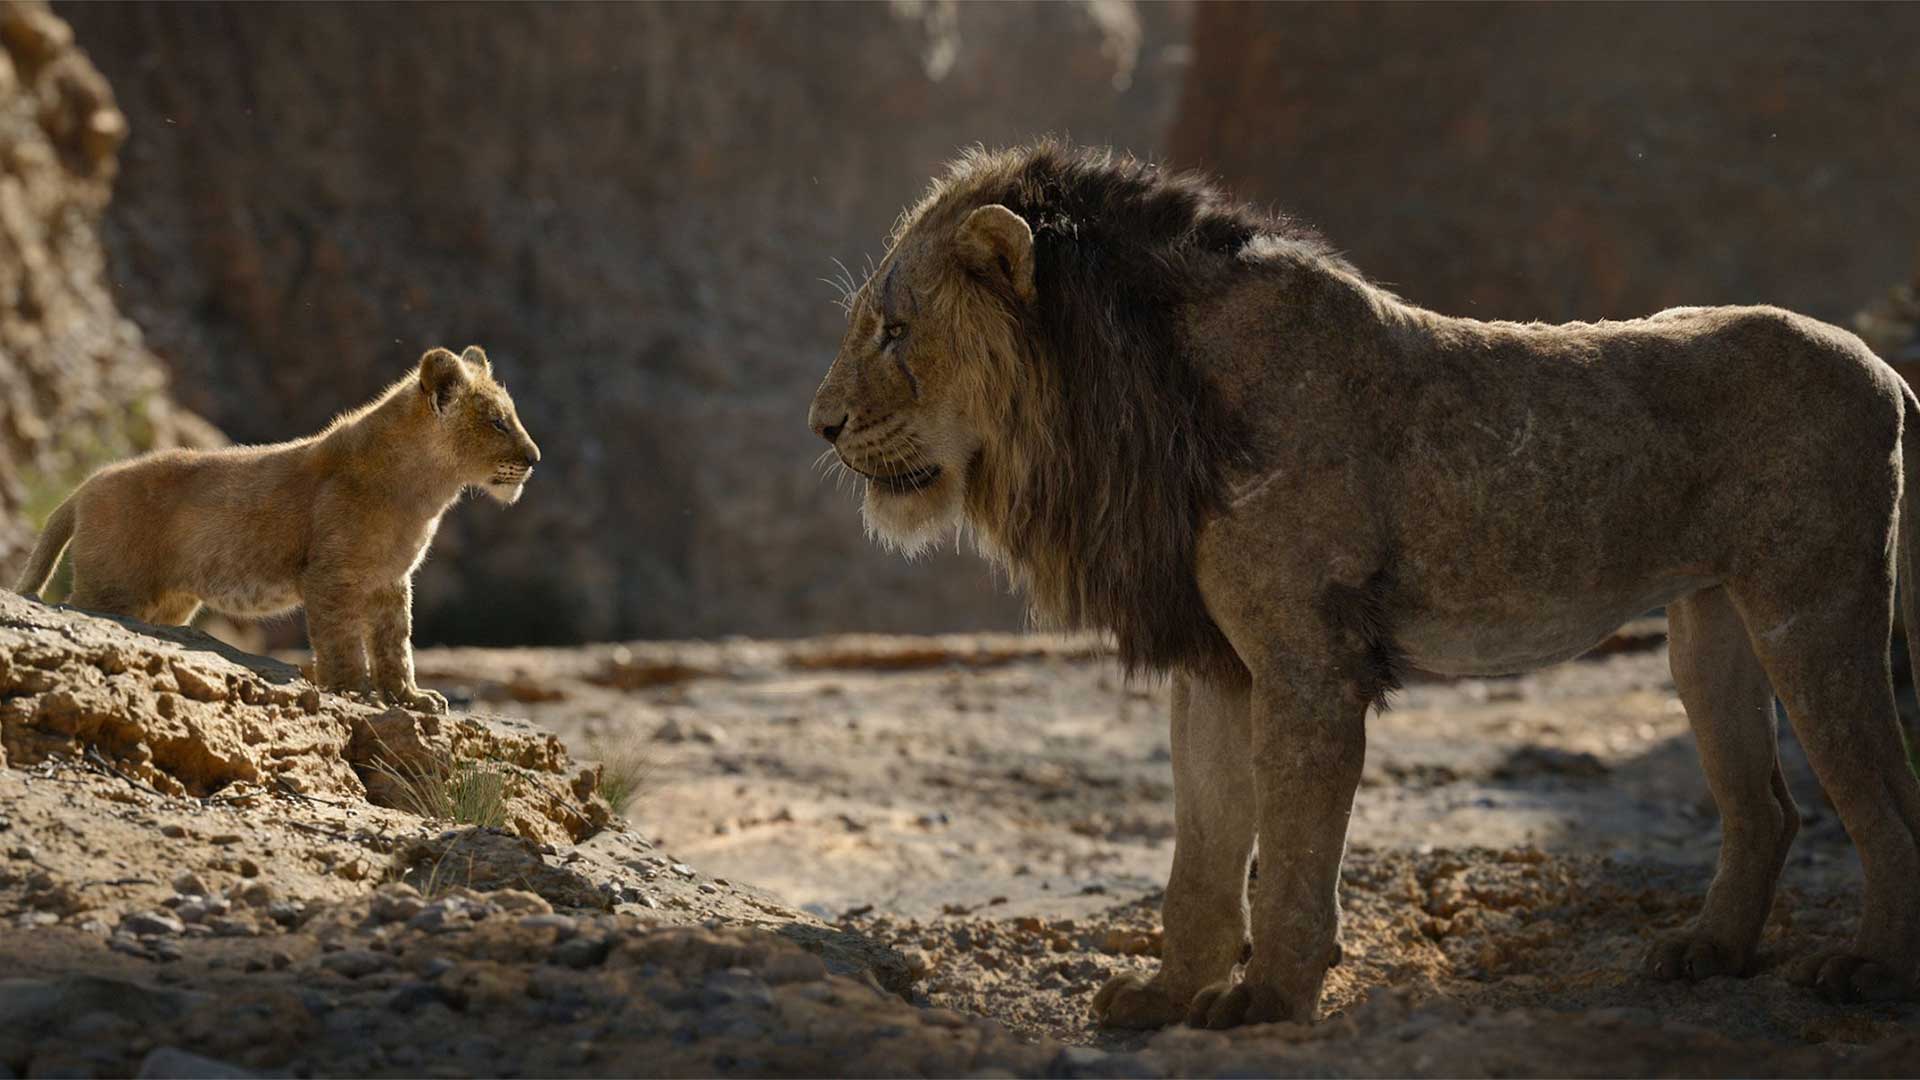 The Lion King Image - Lion King 4k - HD Wallpaper 